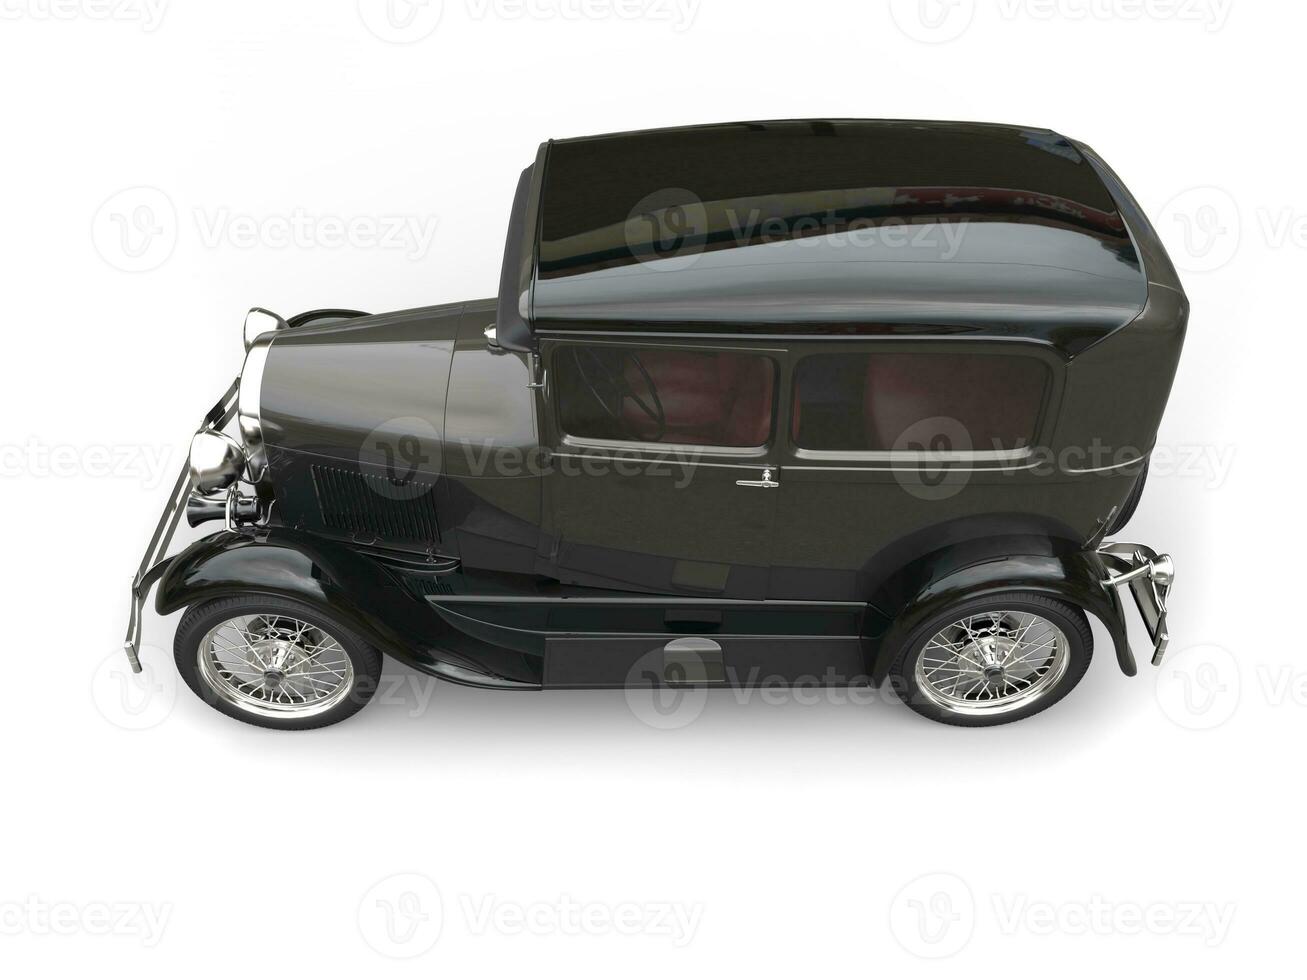 impressionante Preto vintage carro - topo baixa lado Visão - 3d render foto